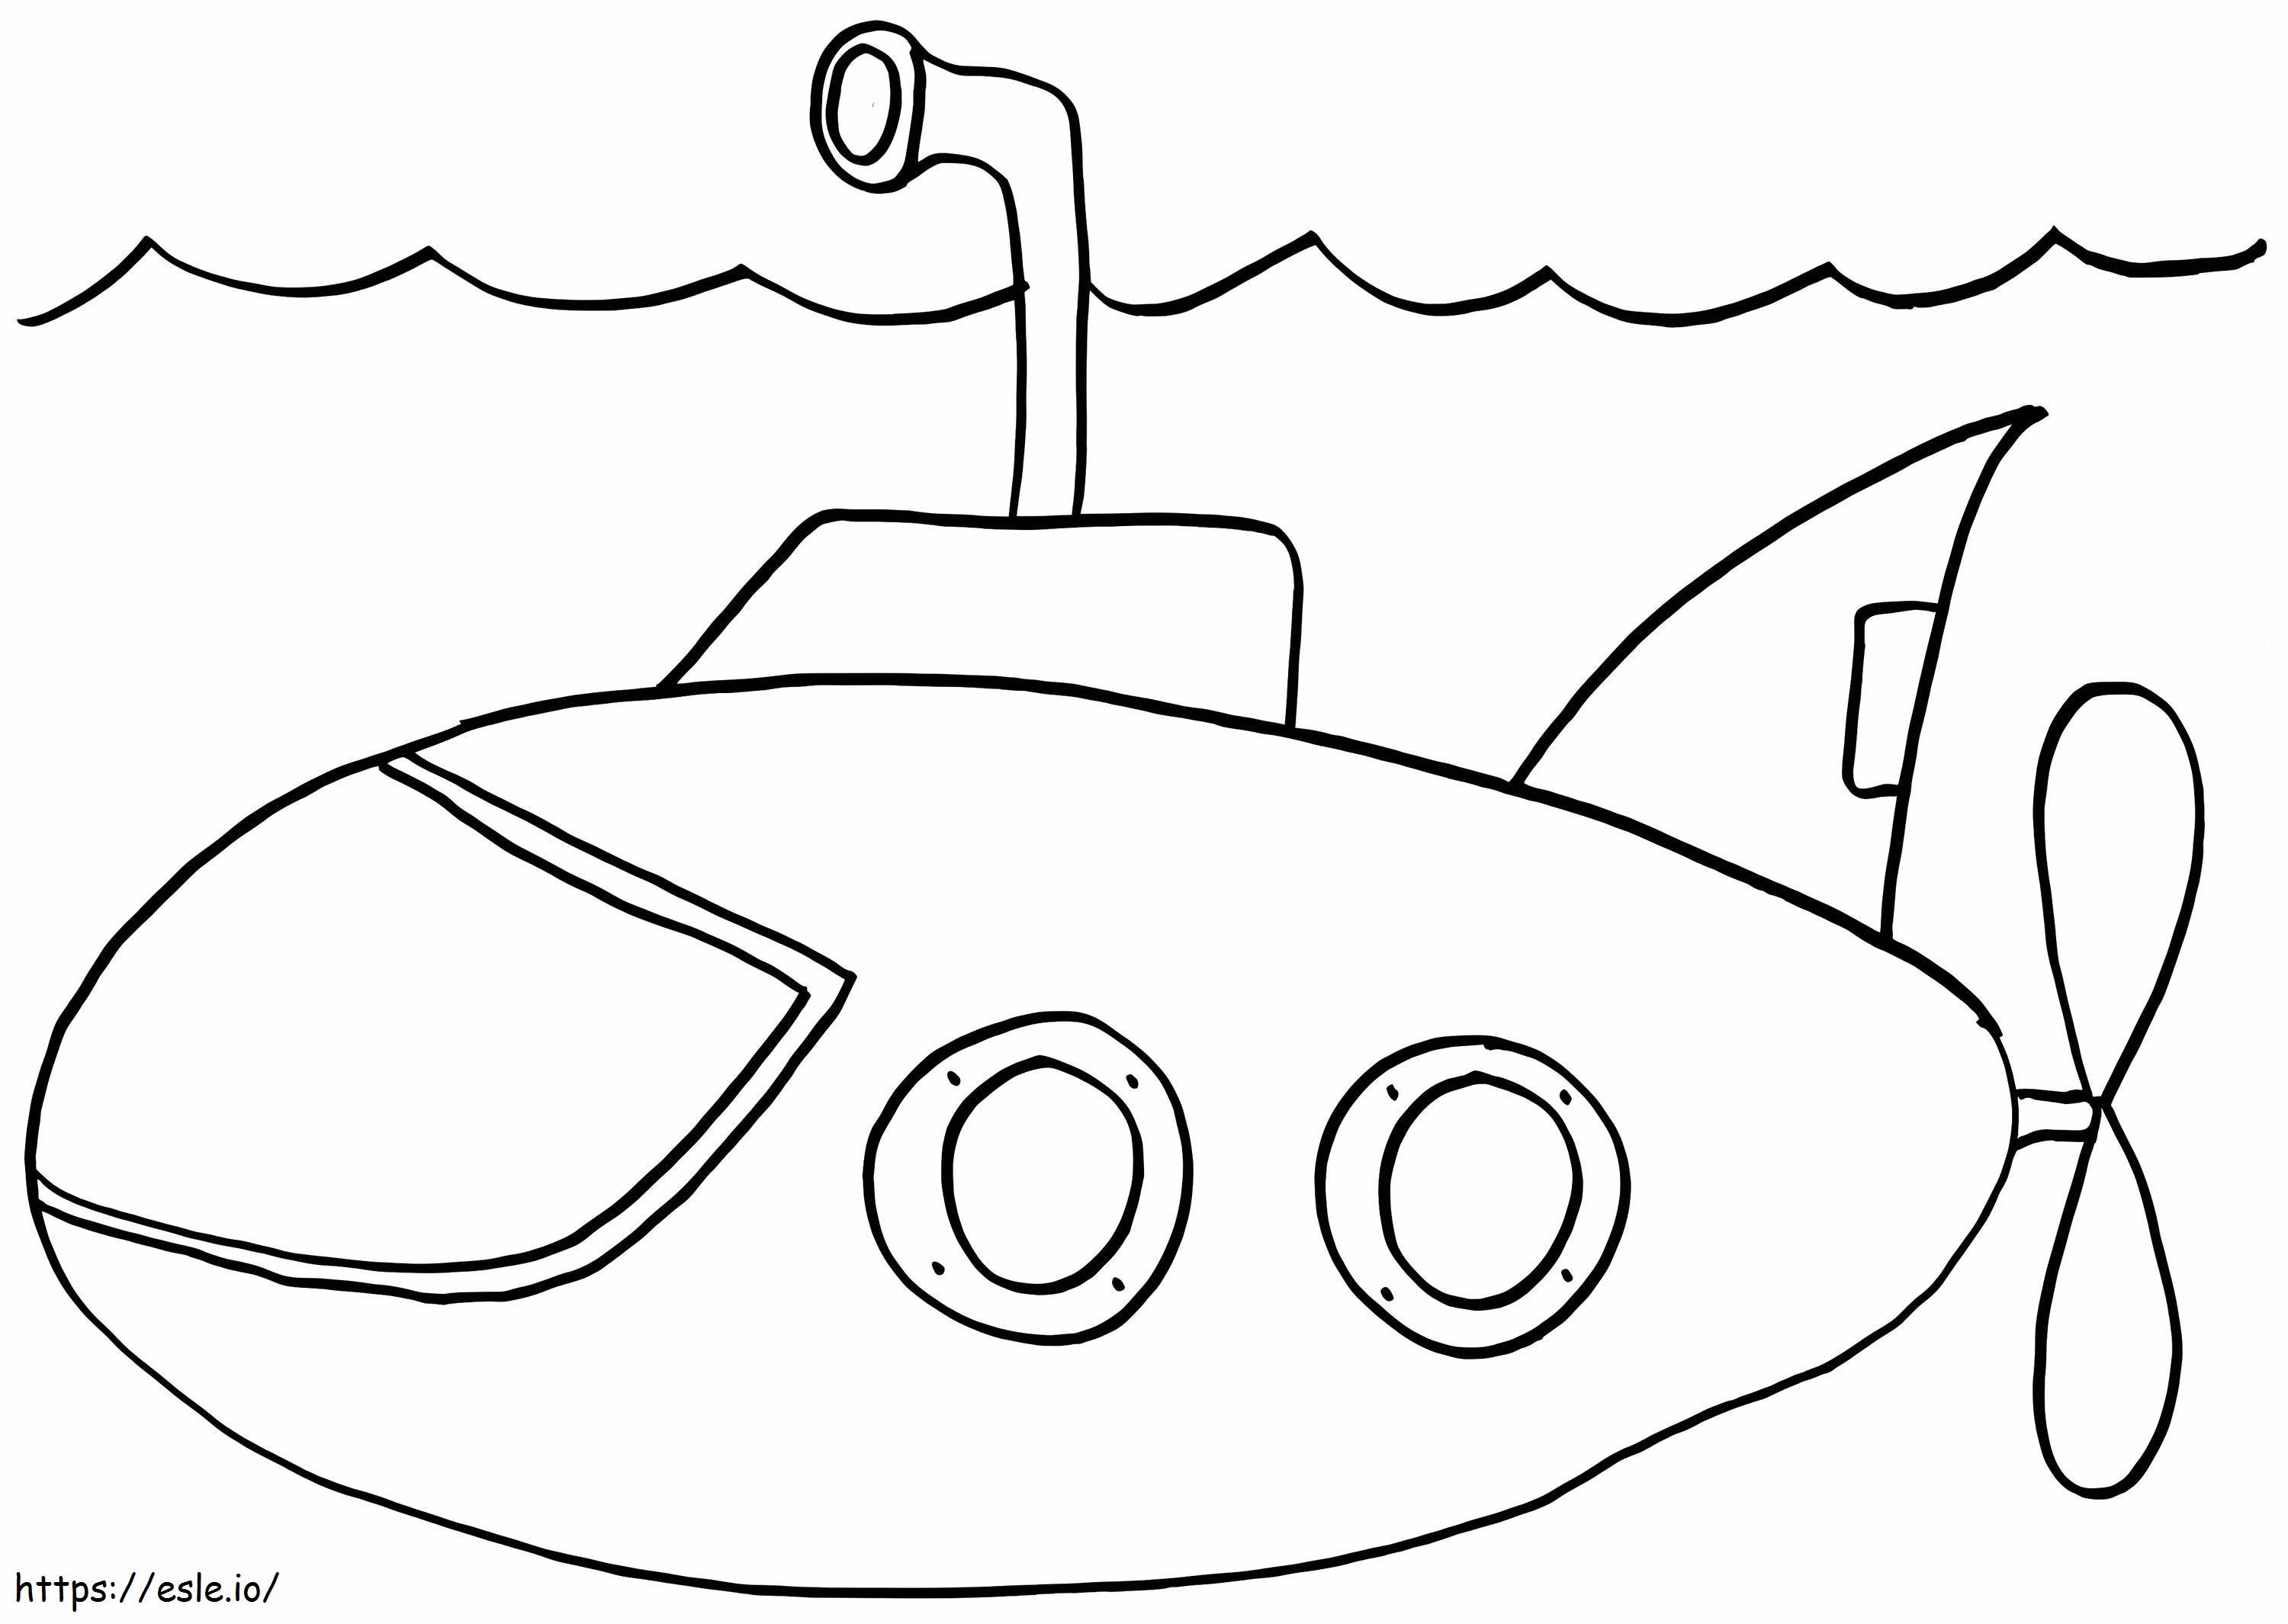 Submarino simple para colorear